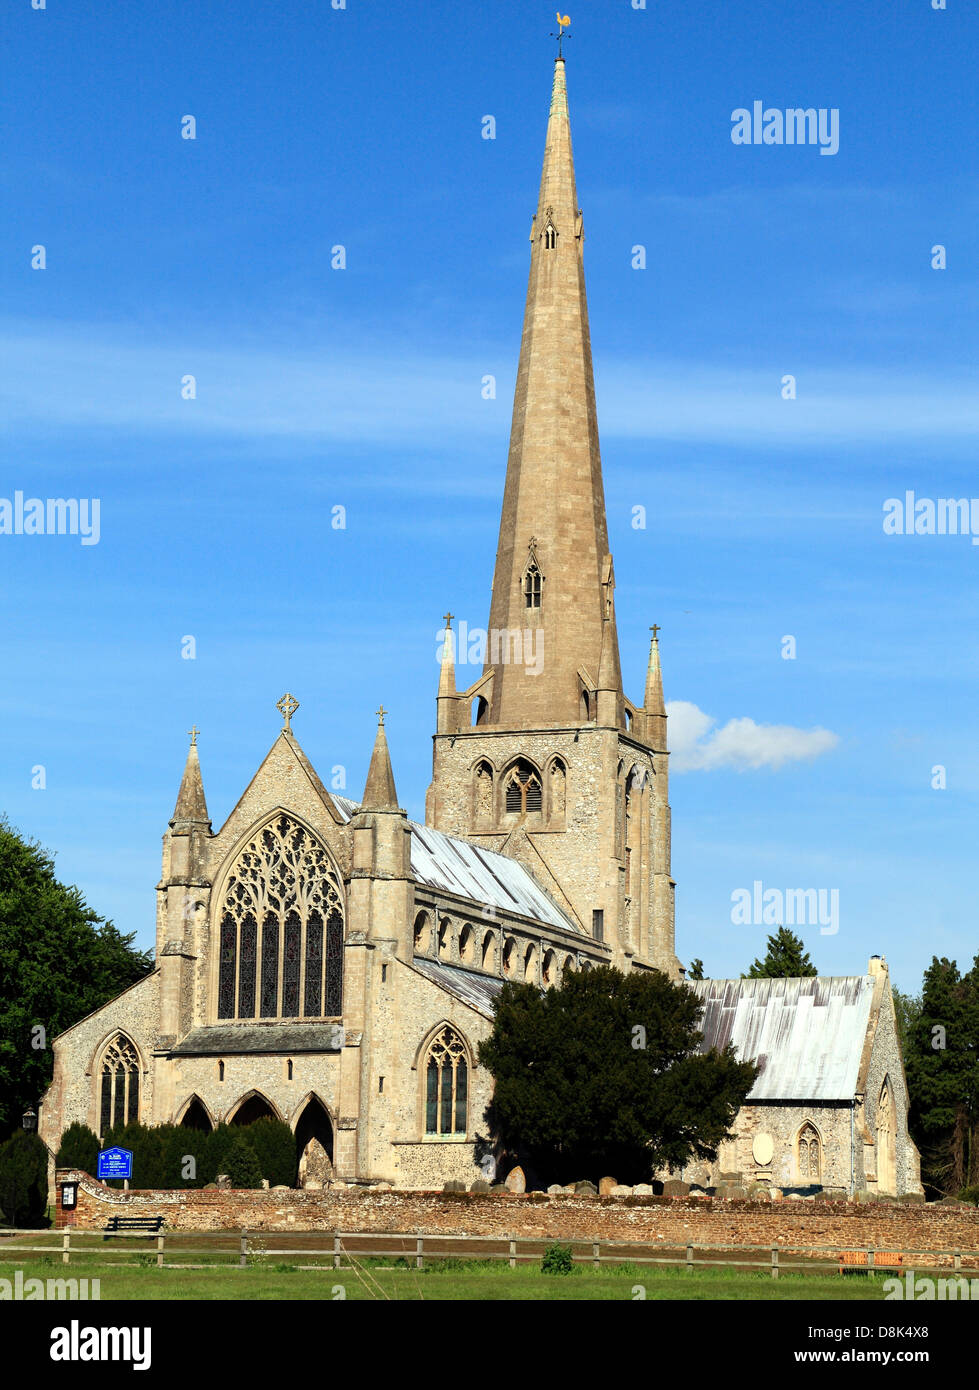 Snettisham, Norfolk, mittelalterliche Kirche mit Turm, England, UK, Englisch Kirchen Türme Stockfoto